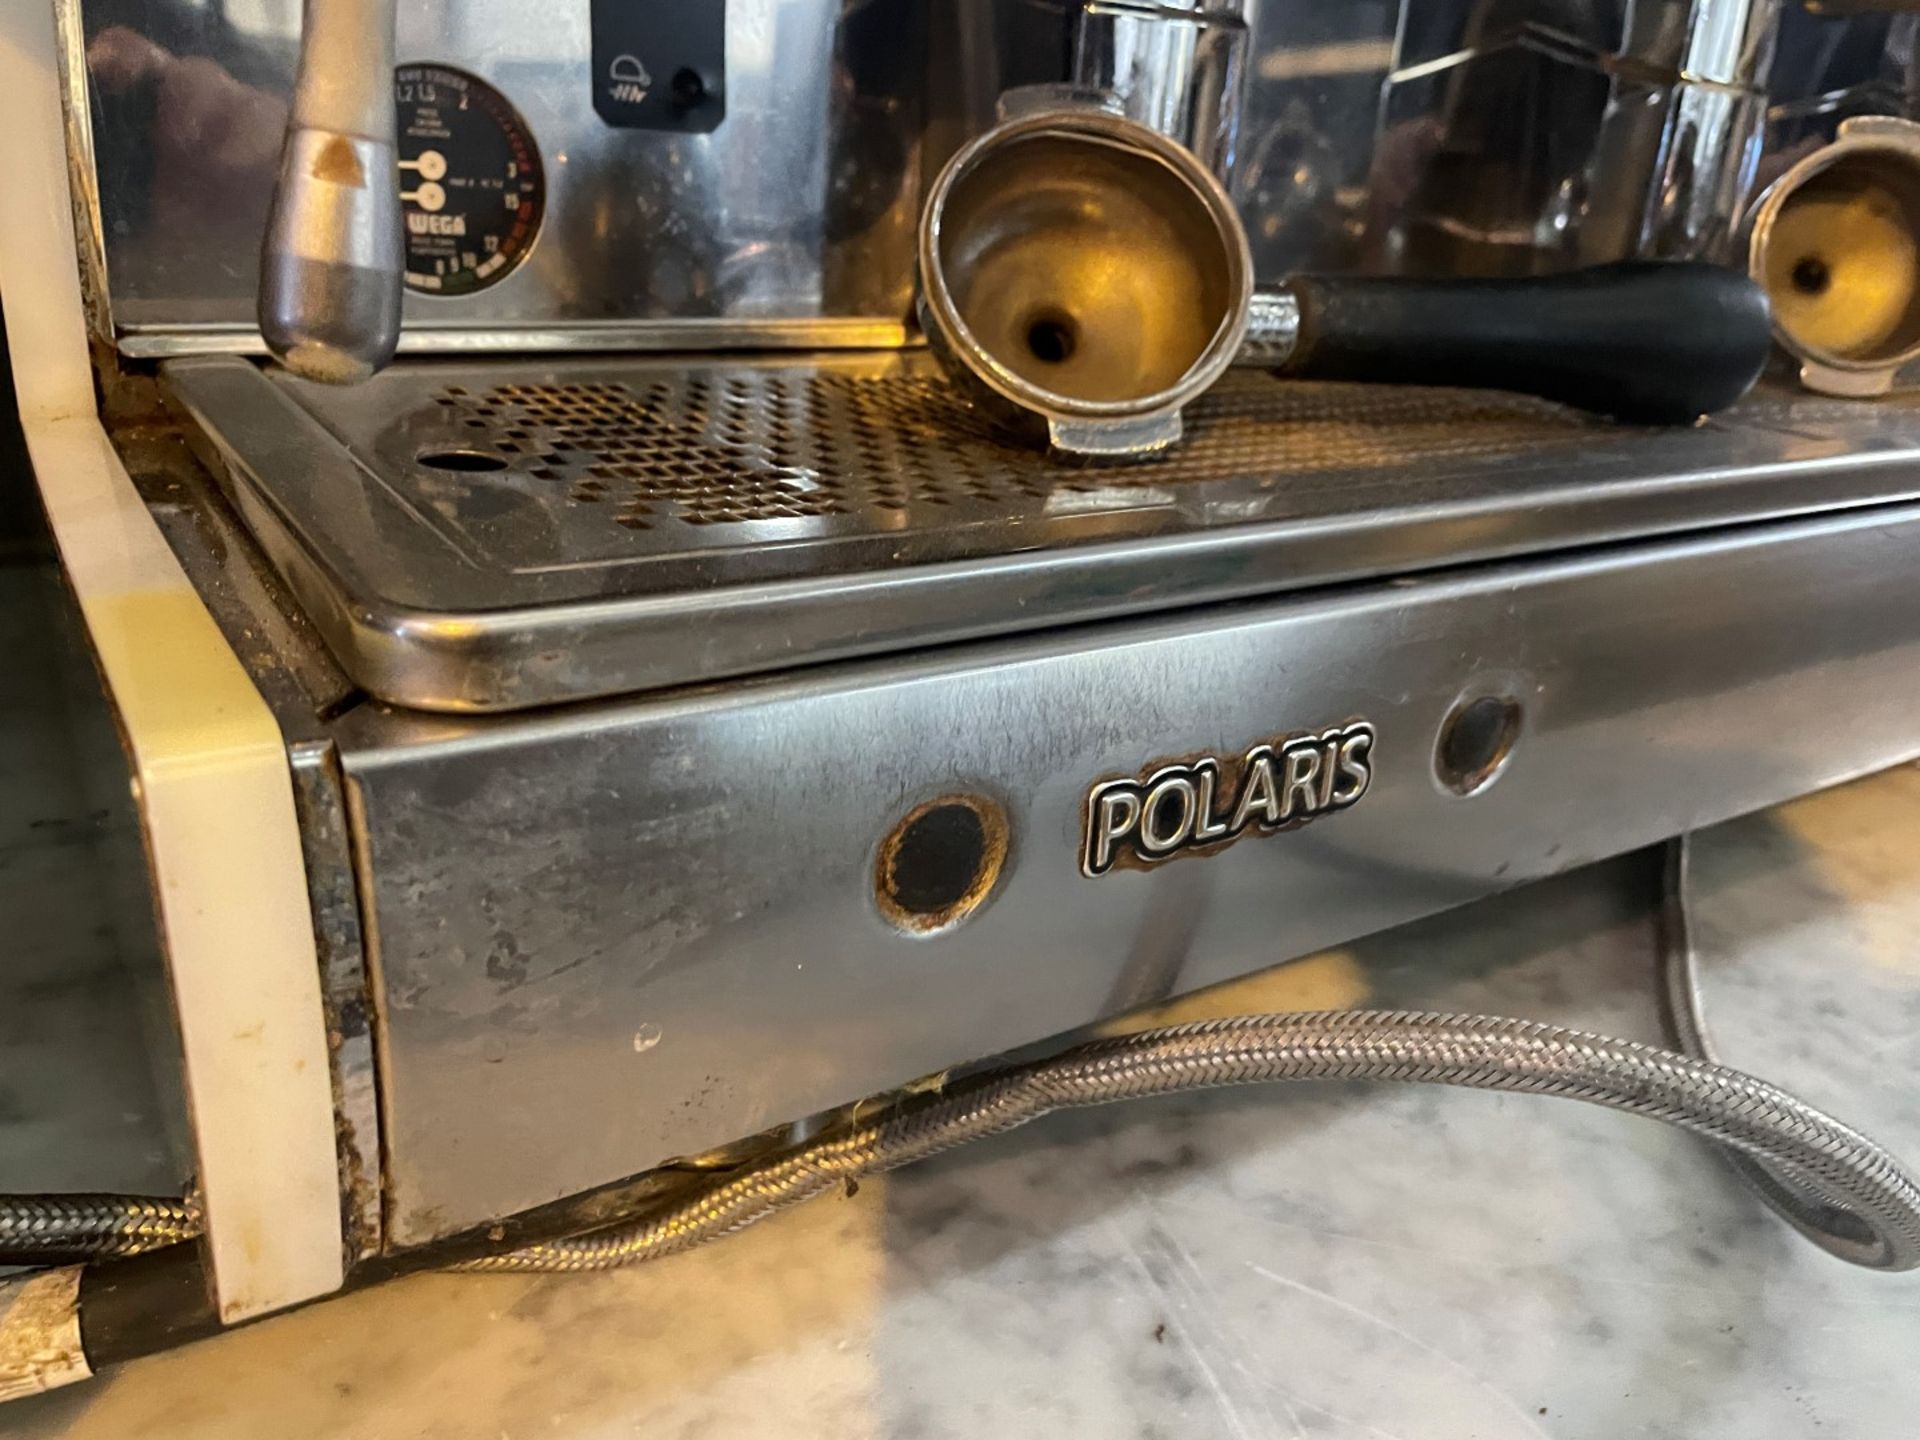 1 x Polaris Wega 3 Group Commercial Espresso Coffee Machine With Evo Display - 3 Phase - Image 4 of 7